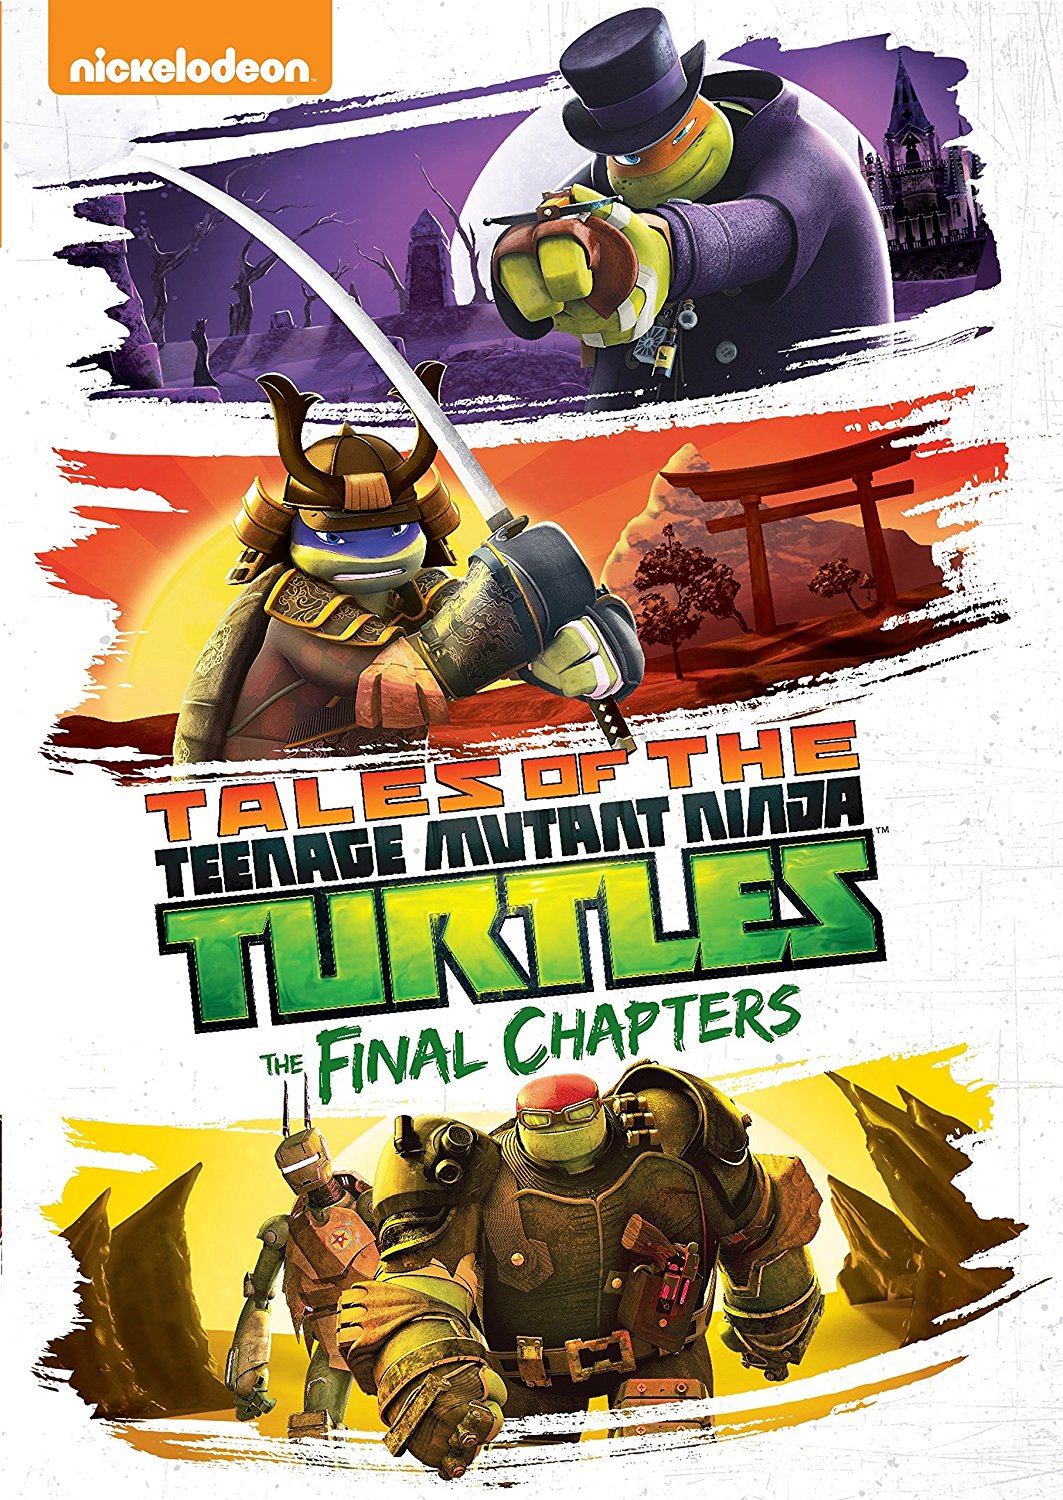 https://2.bp.blogspot.com/-q3Bx_xhm3As/WcWce2CWCNI/AAAAAAAAzB8/8jSVNKYE7Rc7F6kvY2_dBkLF1S3dA50OQCLcBGAs/s1600/Teenage-Mutant-Ninja-Turtles-Tales-Of-The-Turtles-V3-The-Final-Chapters-DVD-3D-Front-Cover-Art-Work-Artwork-Nickelodeon-Home-Entertainment-Paramount-Home-Video-TMNT_2.jpg